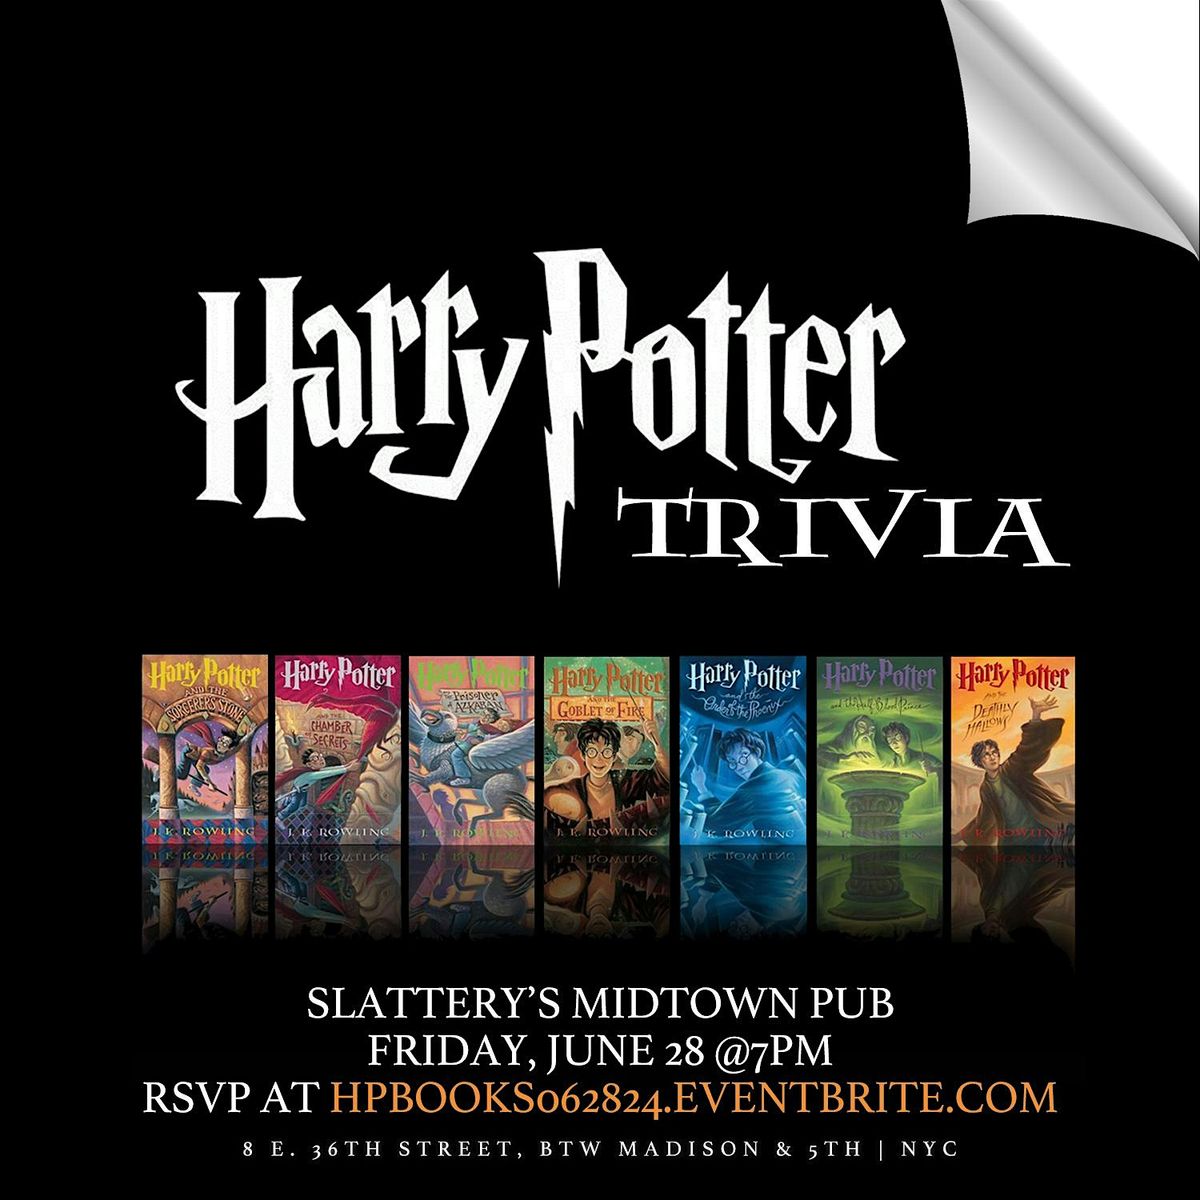 Harry Potter (Book) Trivia